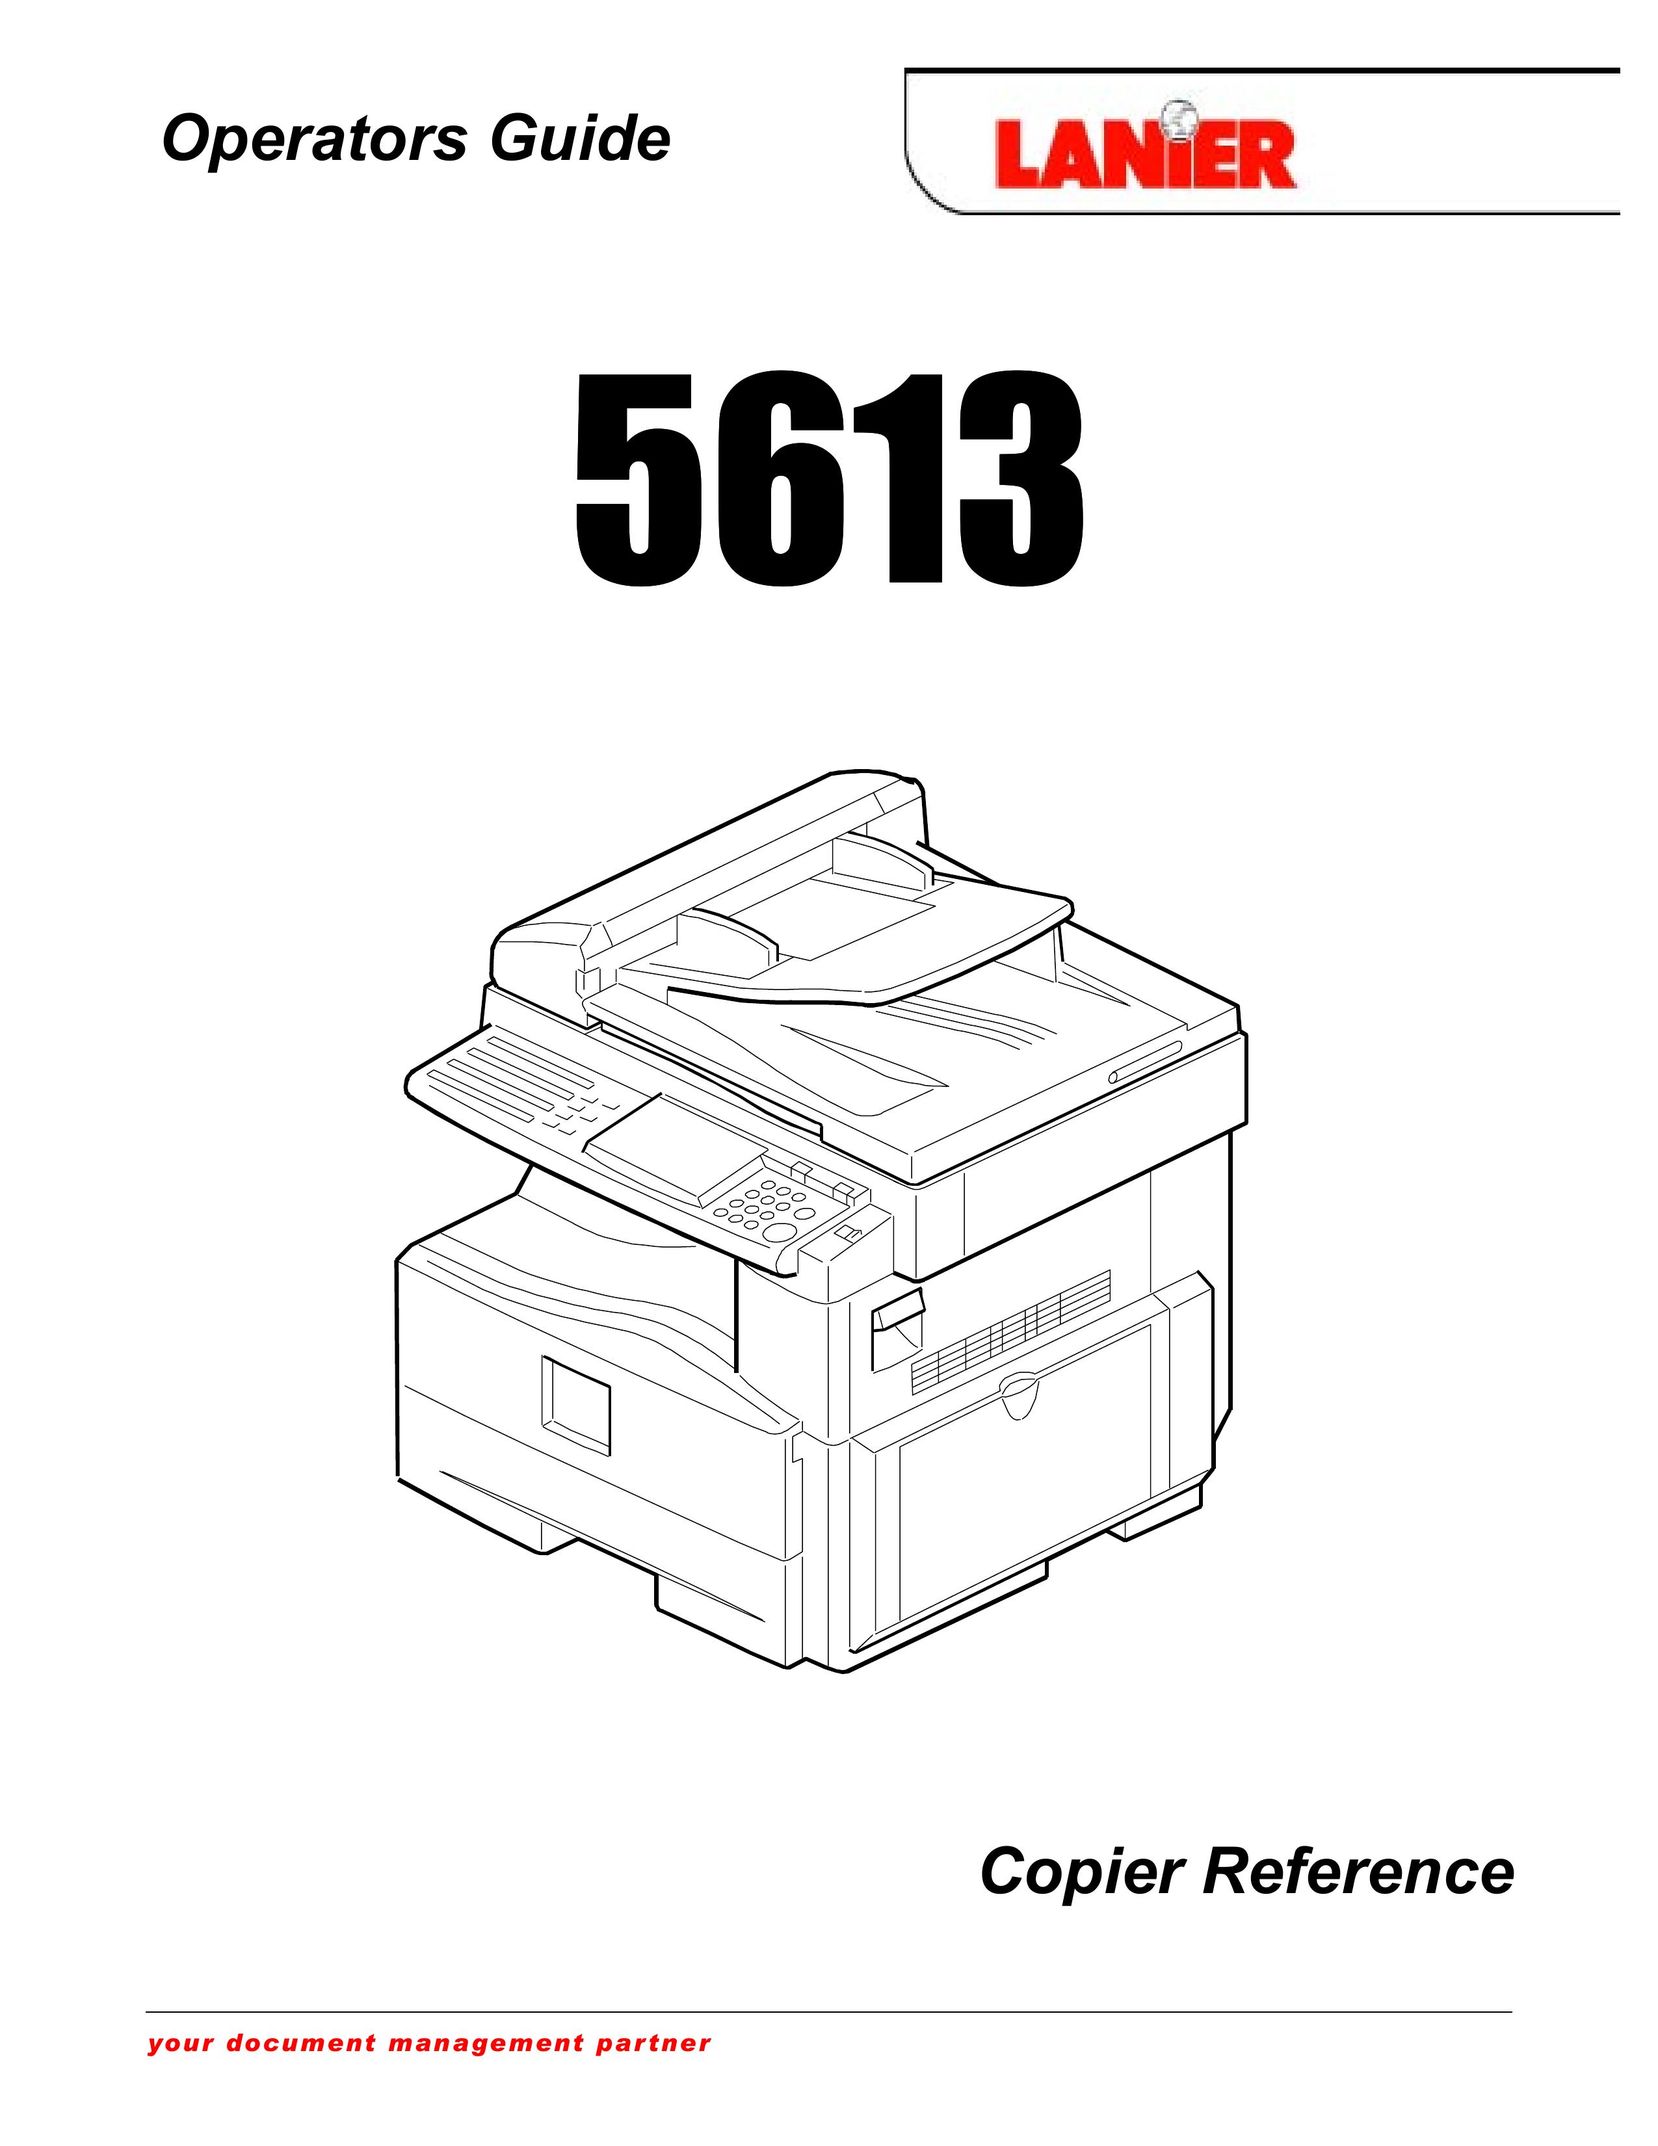 Lanier 5613 All in One Printer User Manual